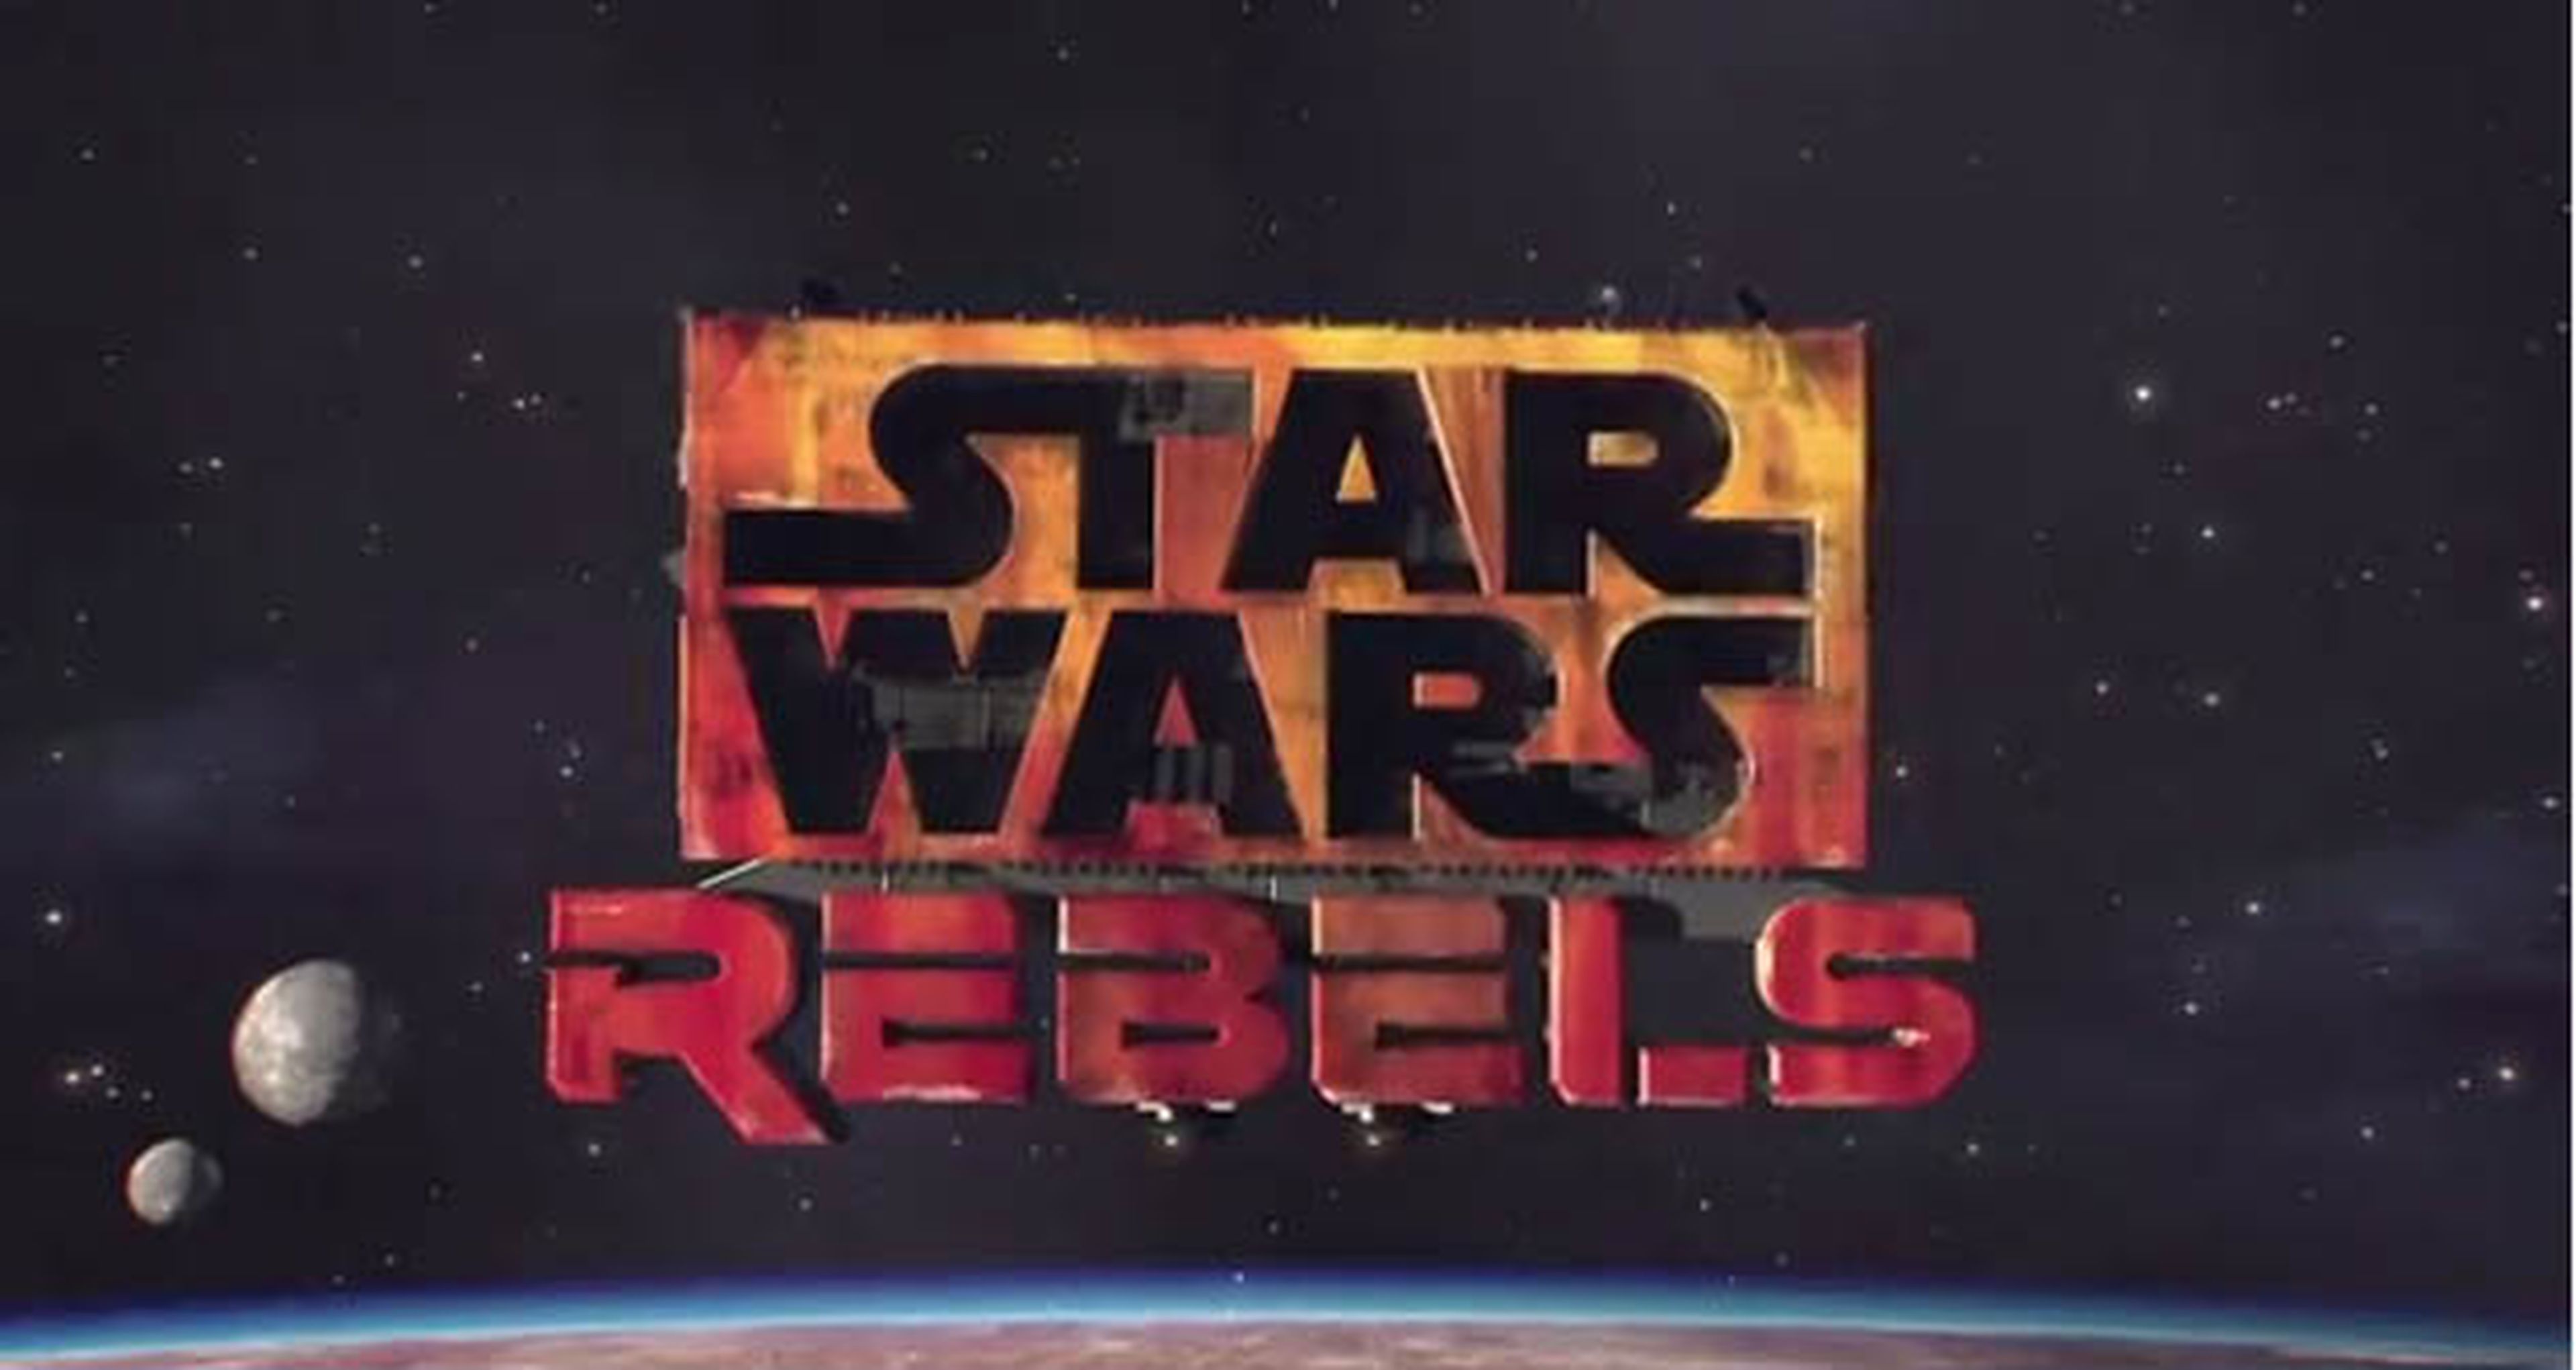 Primer teaser trailer de Star Wars Rebels, revelado